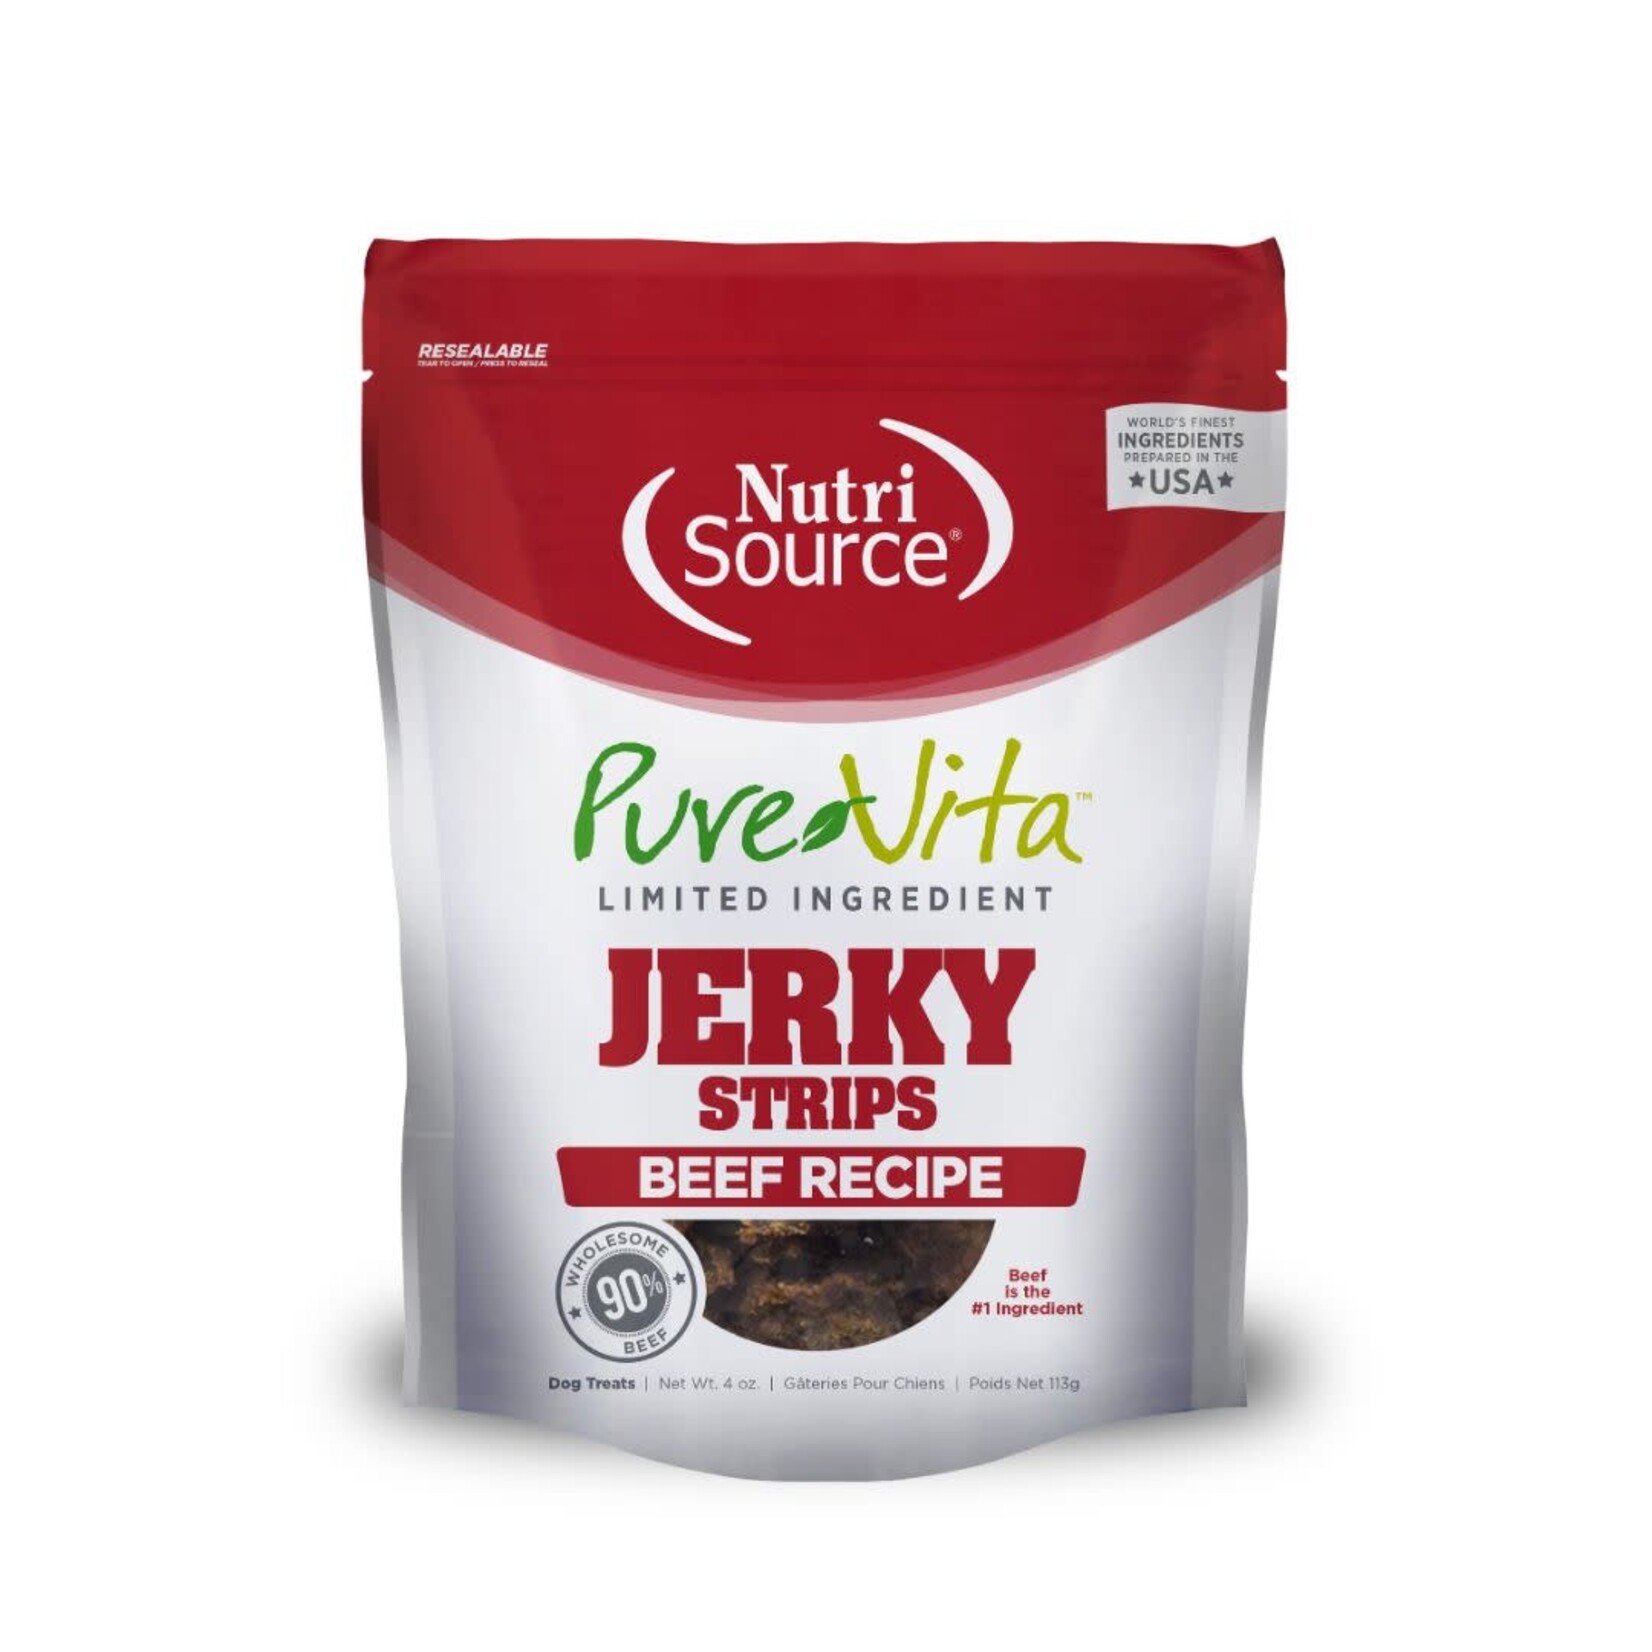 PureVita (by NutriSource) PureVita Beef Recipe Jerky Strips